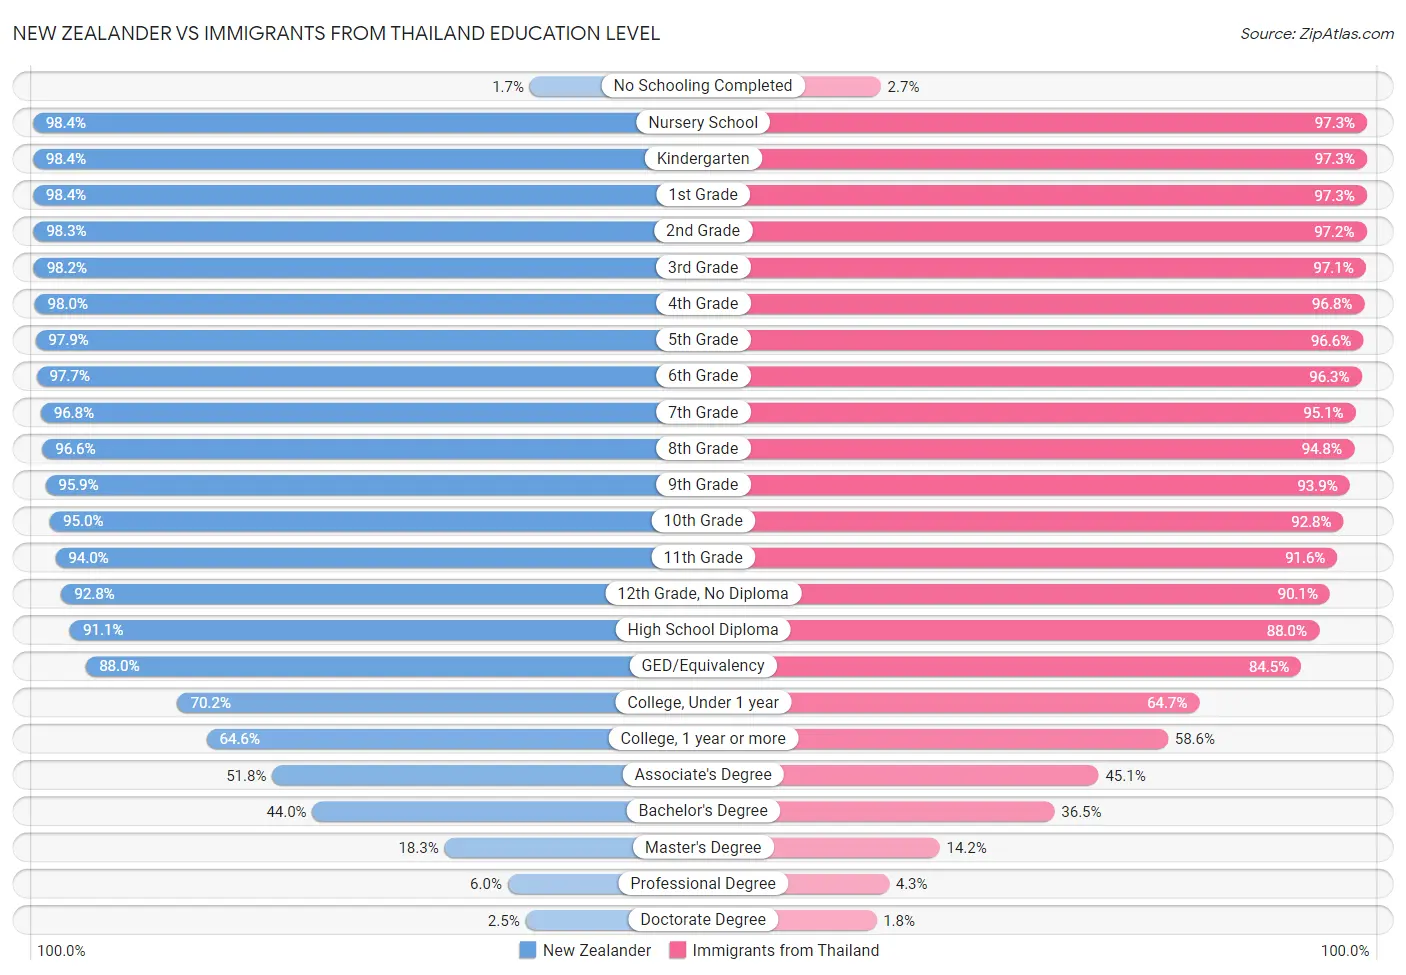 New Zealander vs Immigrants from Thailand Education Level